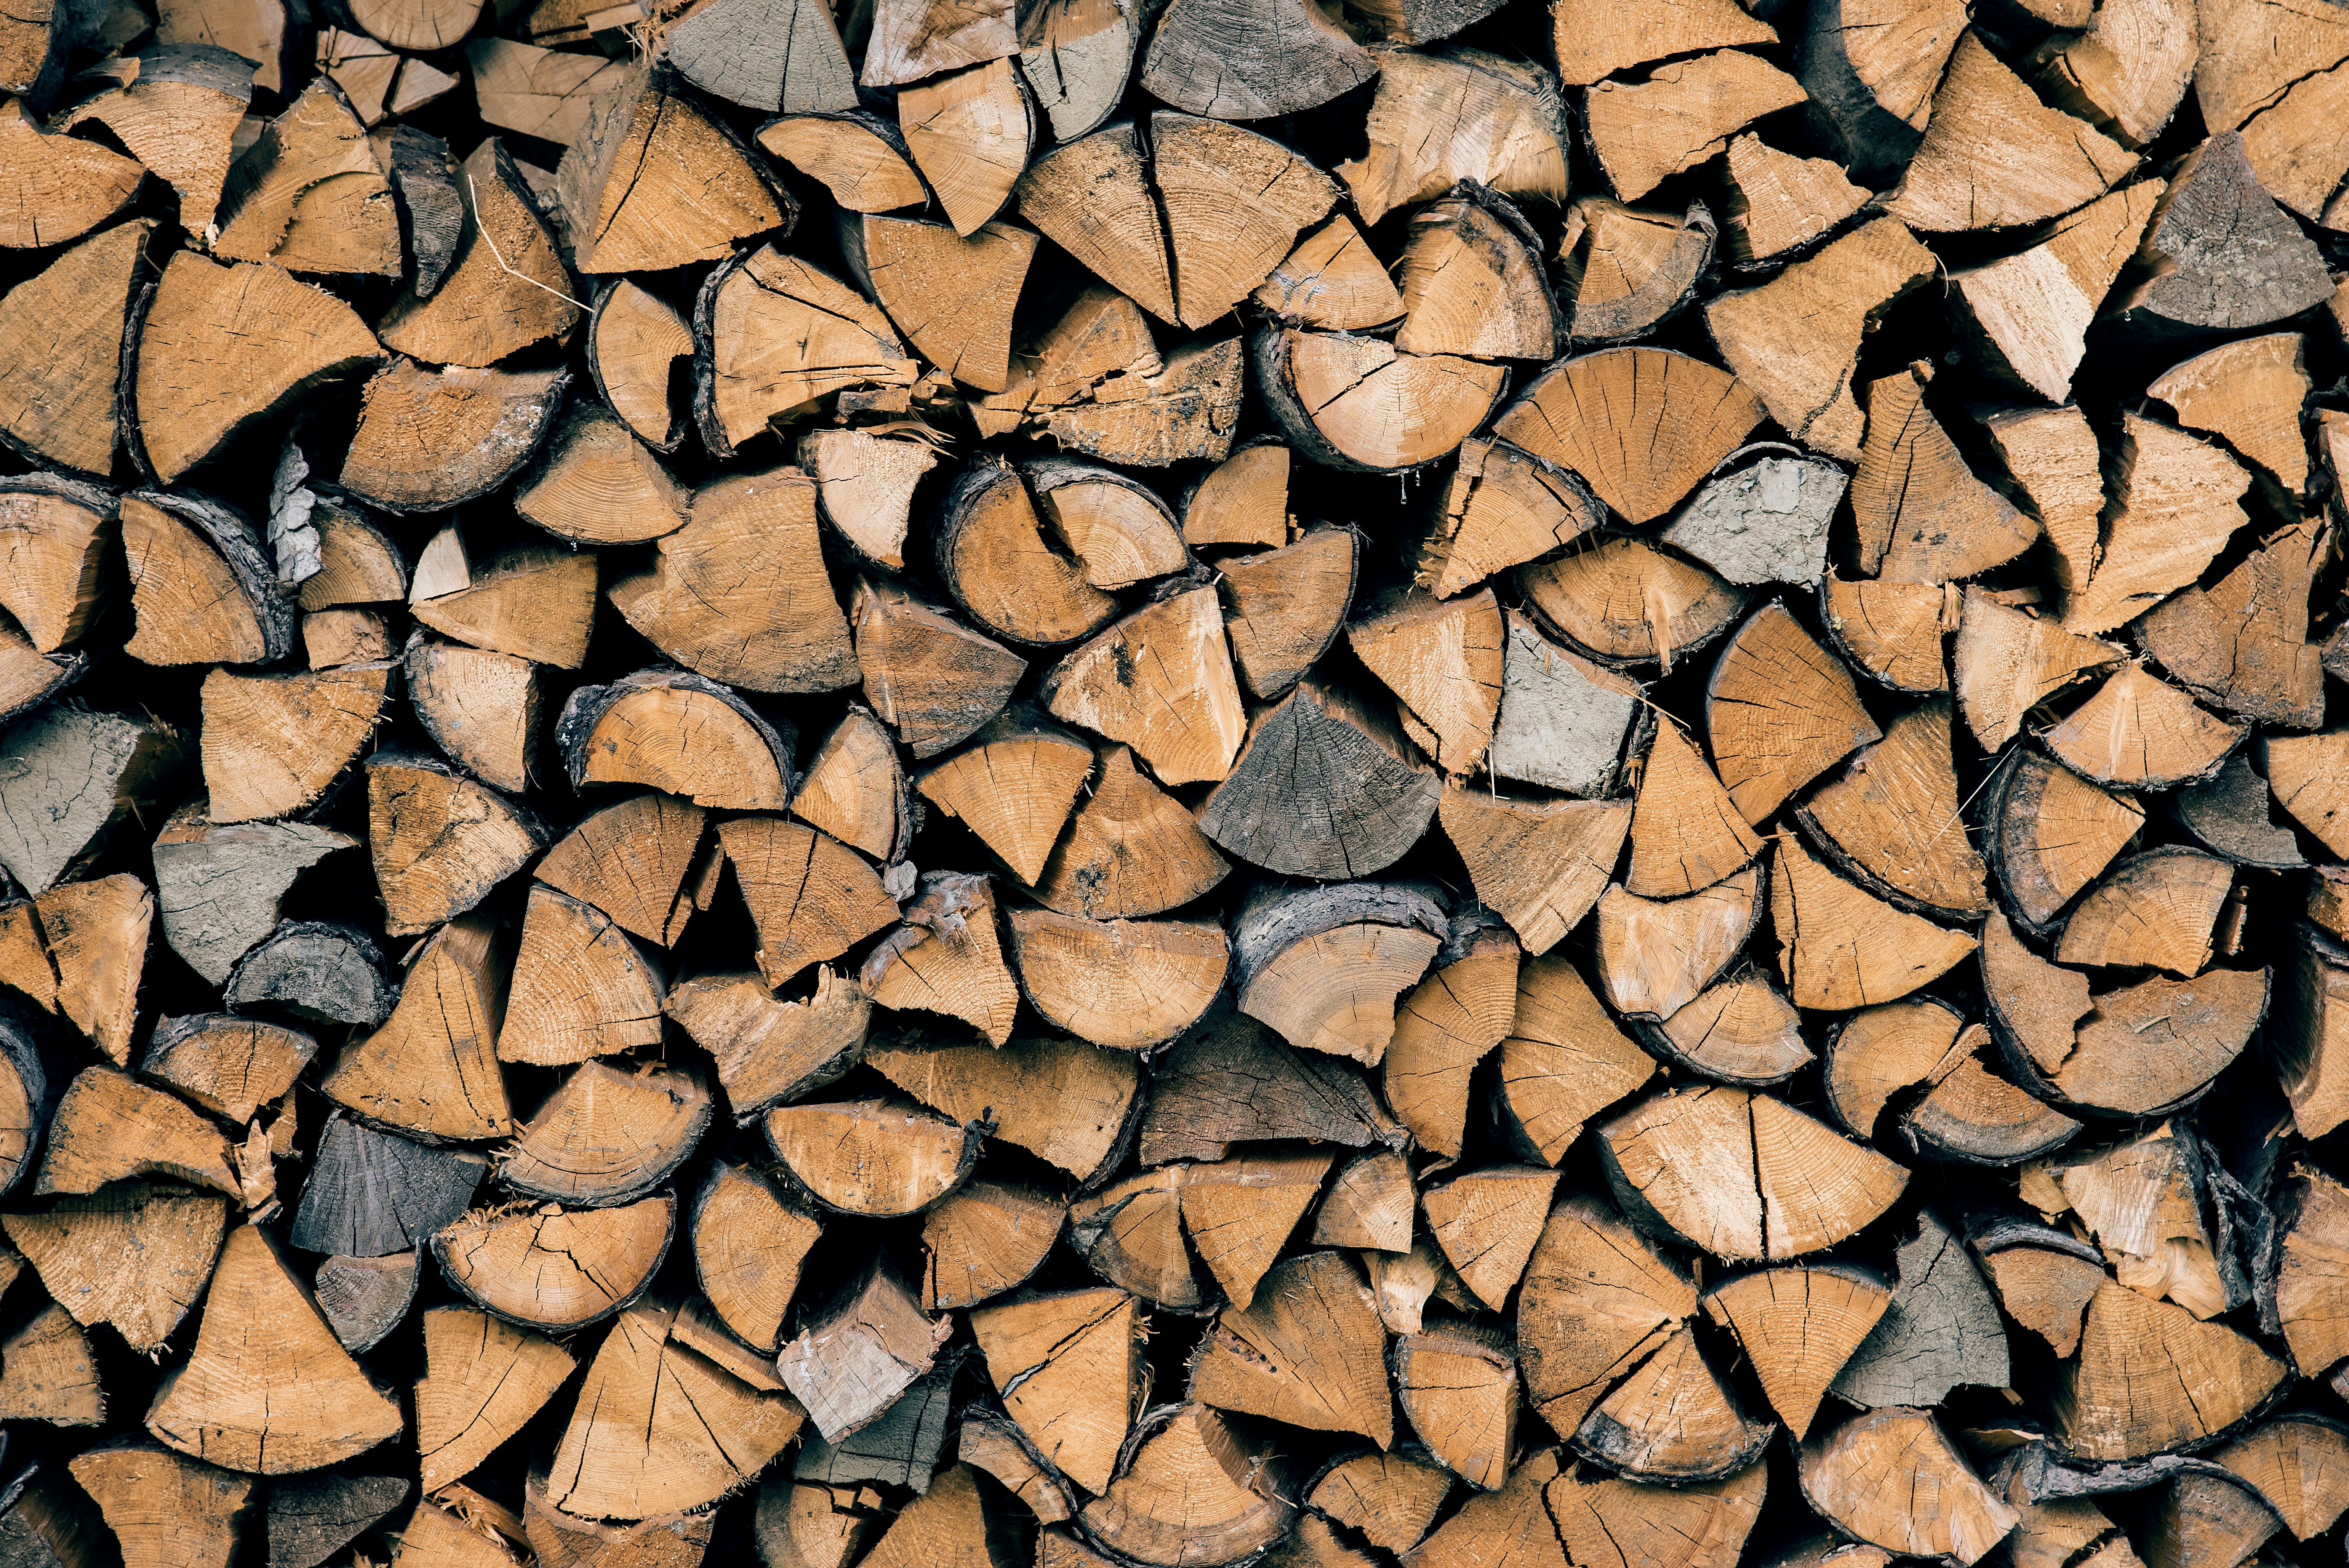 Firewood wedges